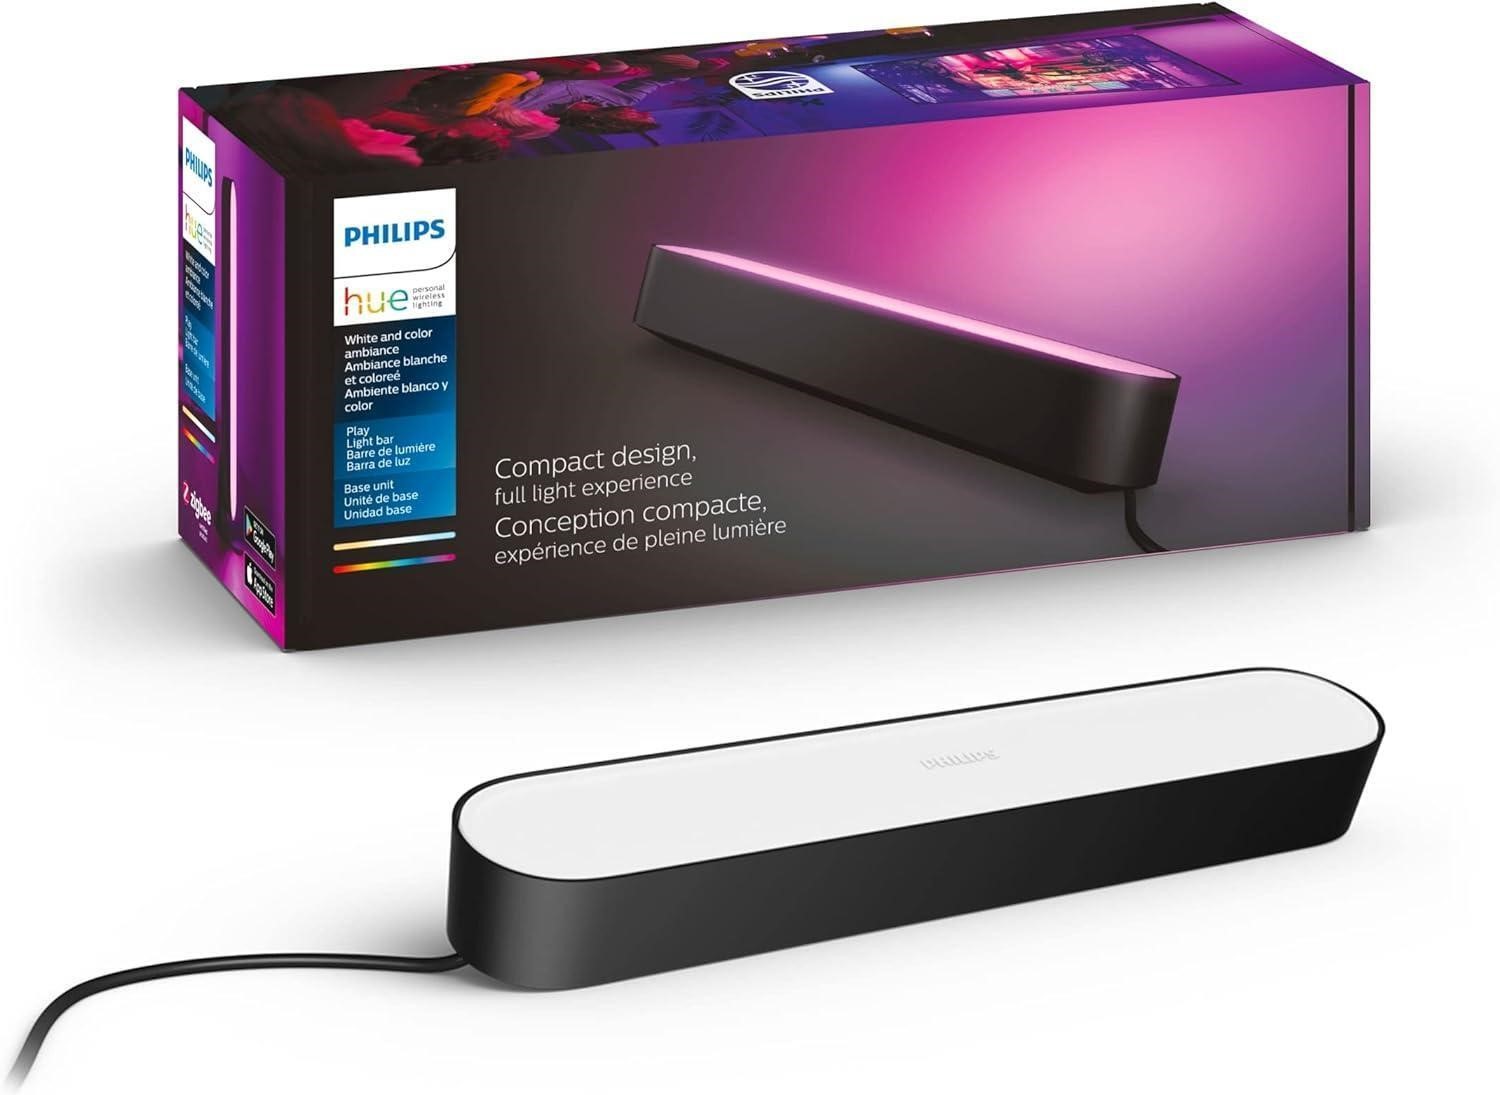 NEW-Philips Hue Play Smart Light Kit